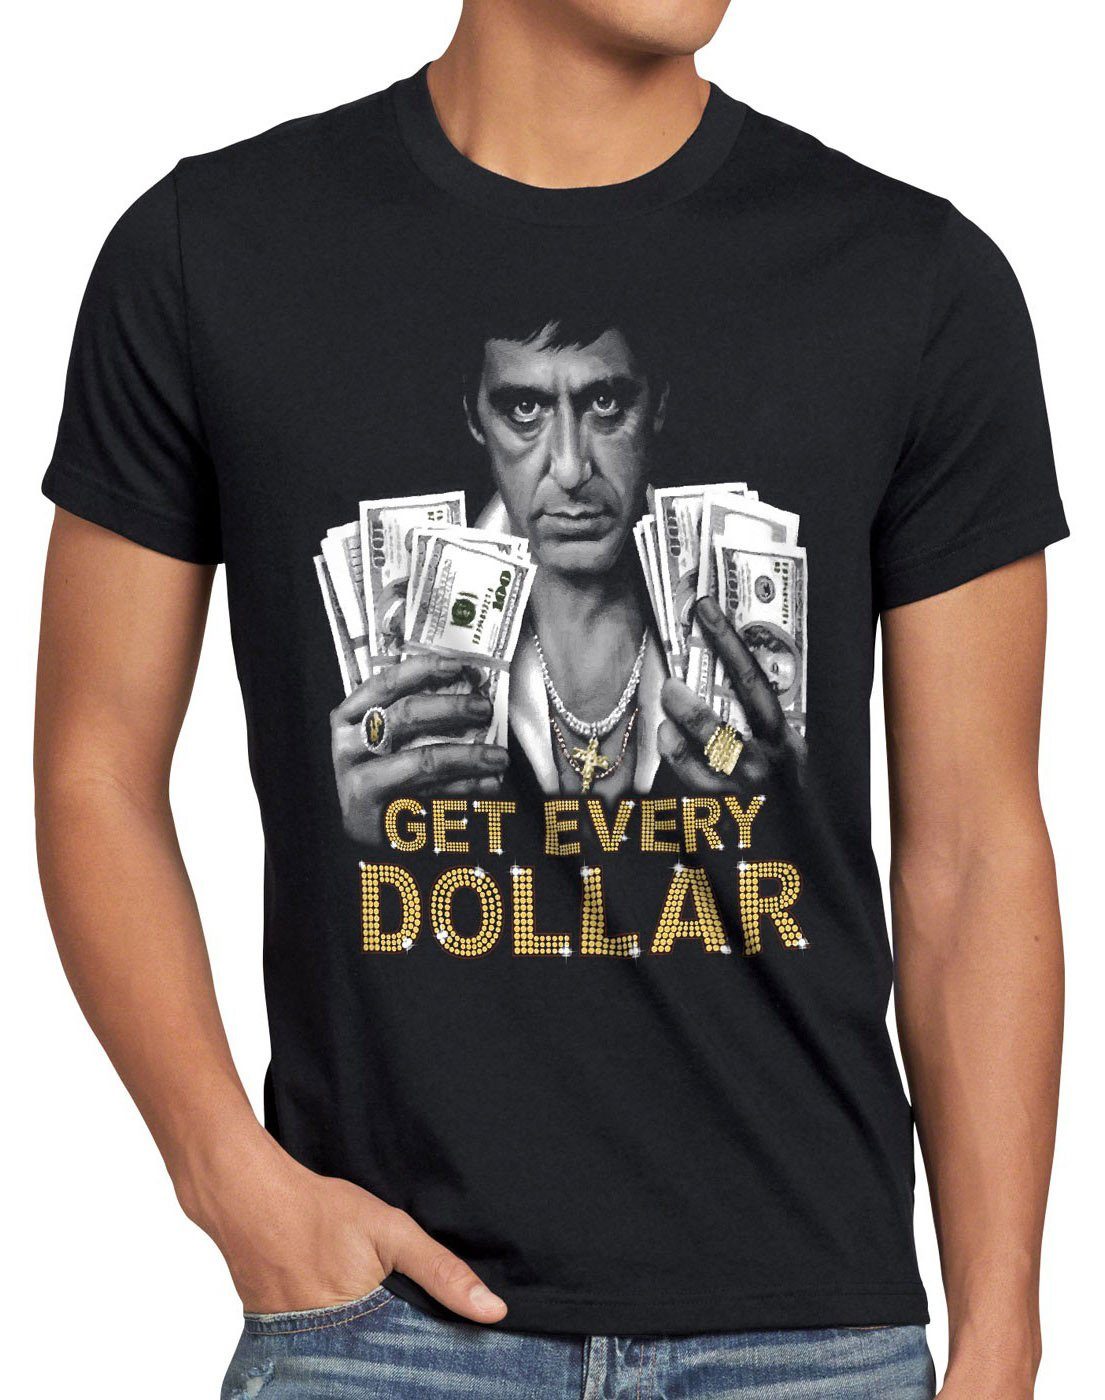 Dollar Tony gangster usa escobar pablo Scarface al pacino style3 Herren T-Shirt Print-Shirt Montana